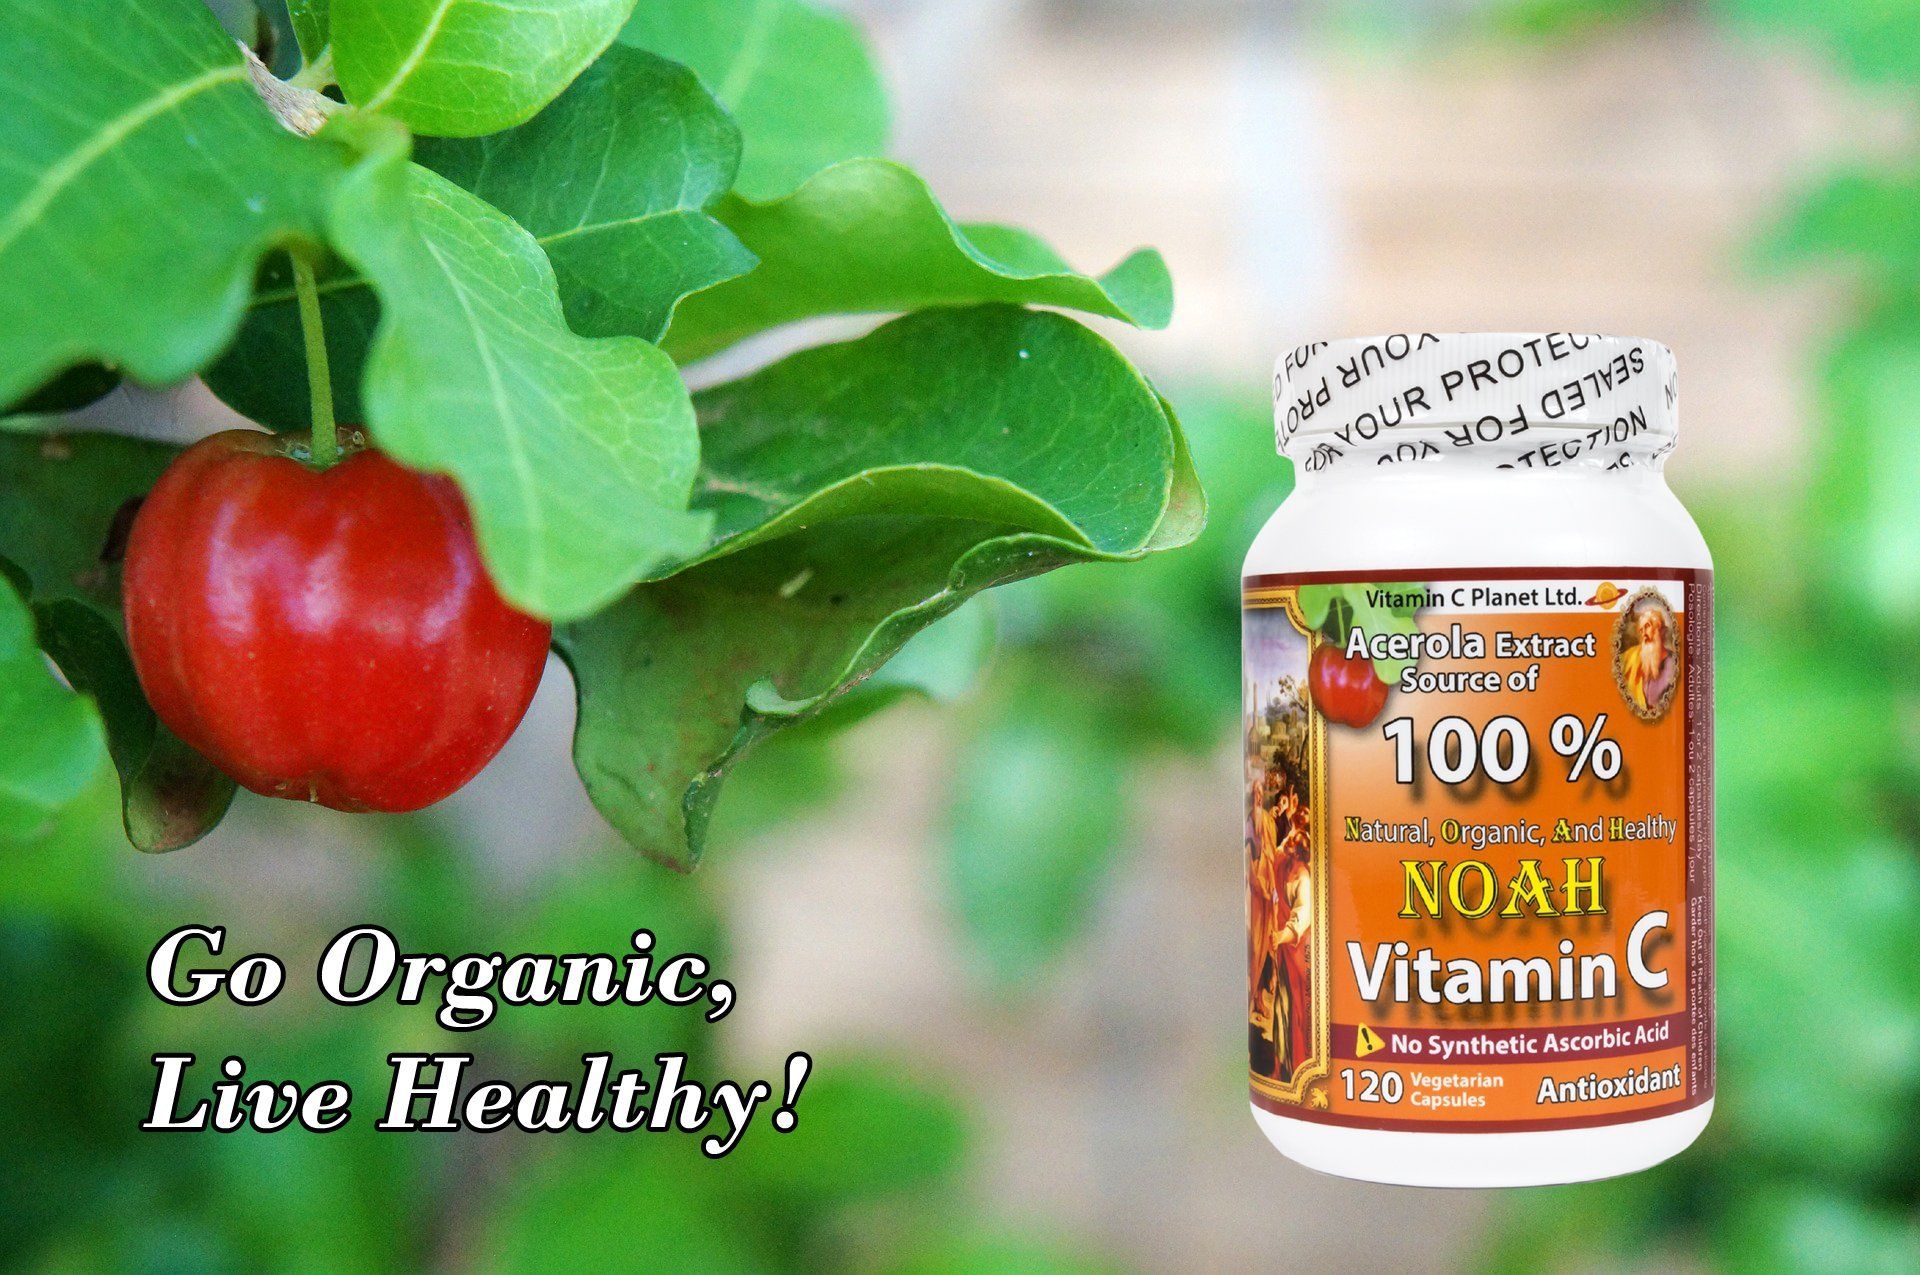 best natural organic vitamin c supplement vitamin c planet